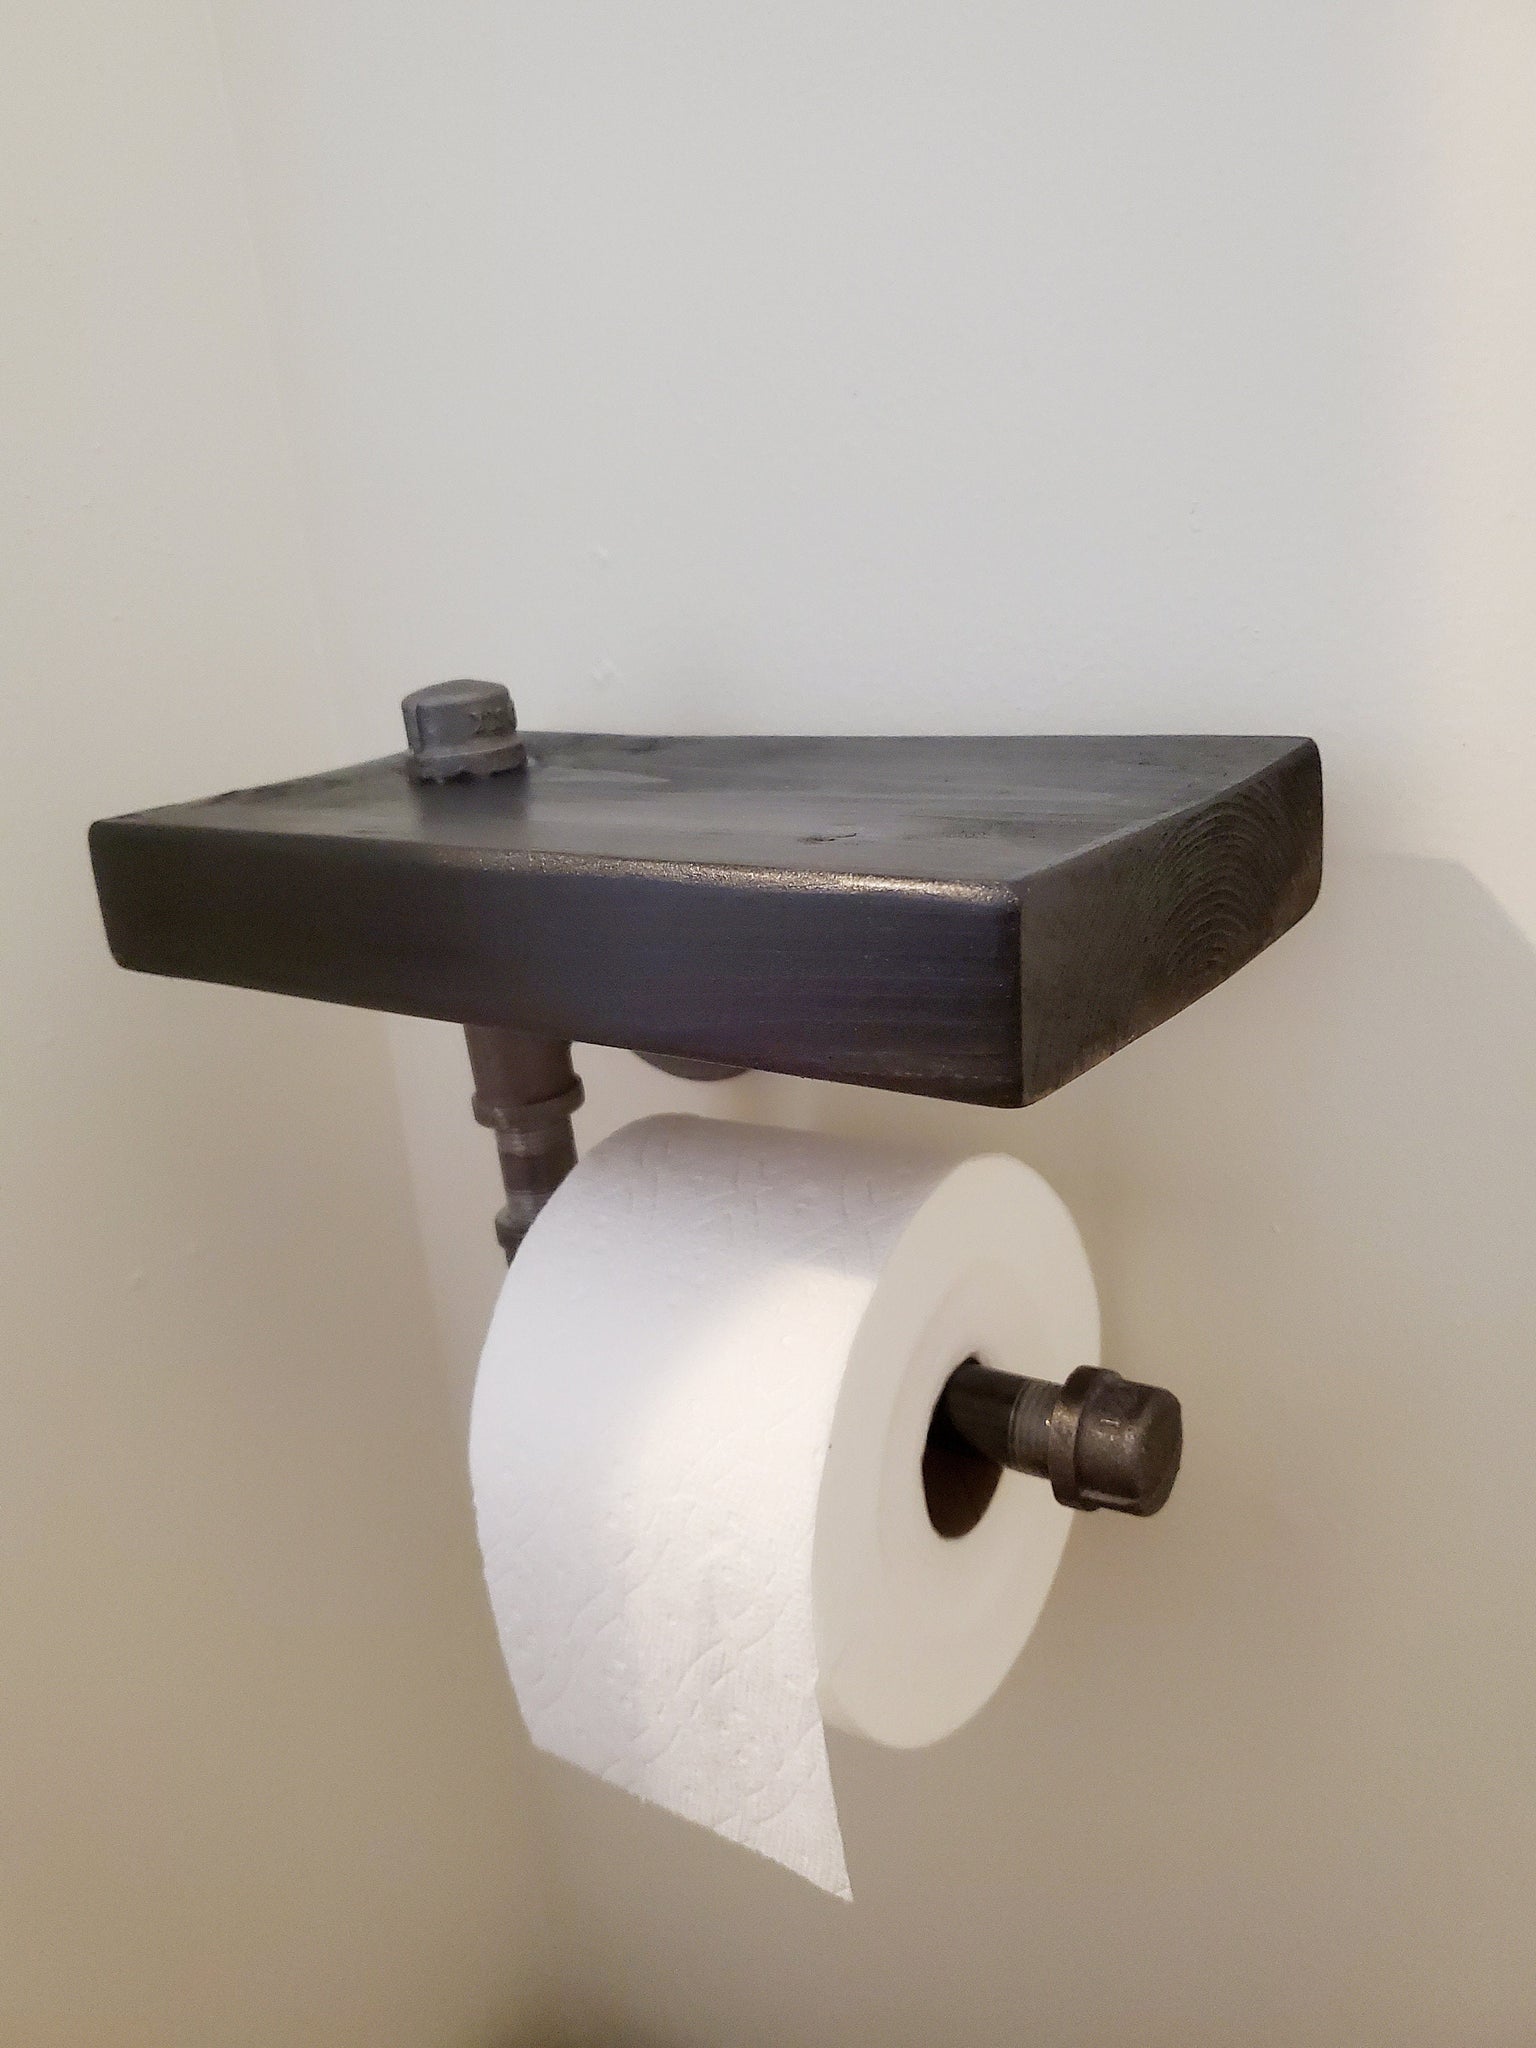 Rustic Bathroom Toilet Paper Holder with Shelf - Industrial Decor -  Farmhouse